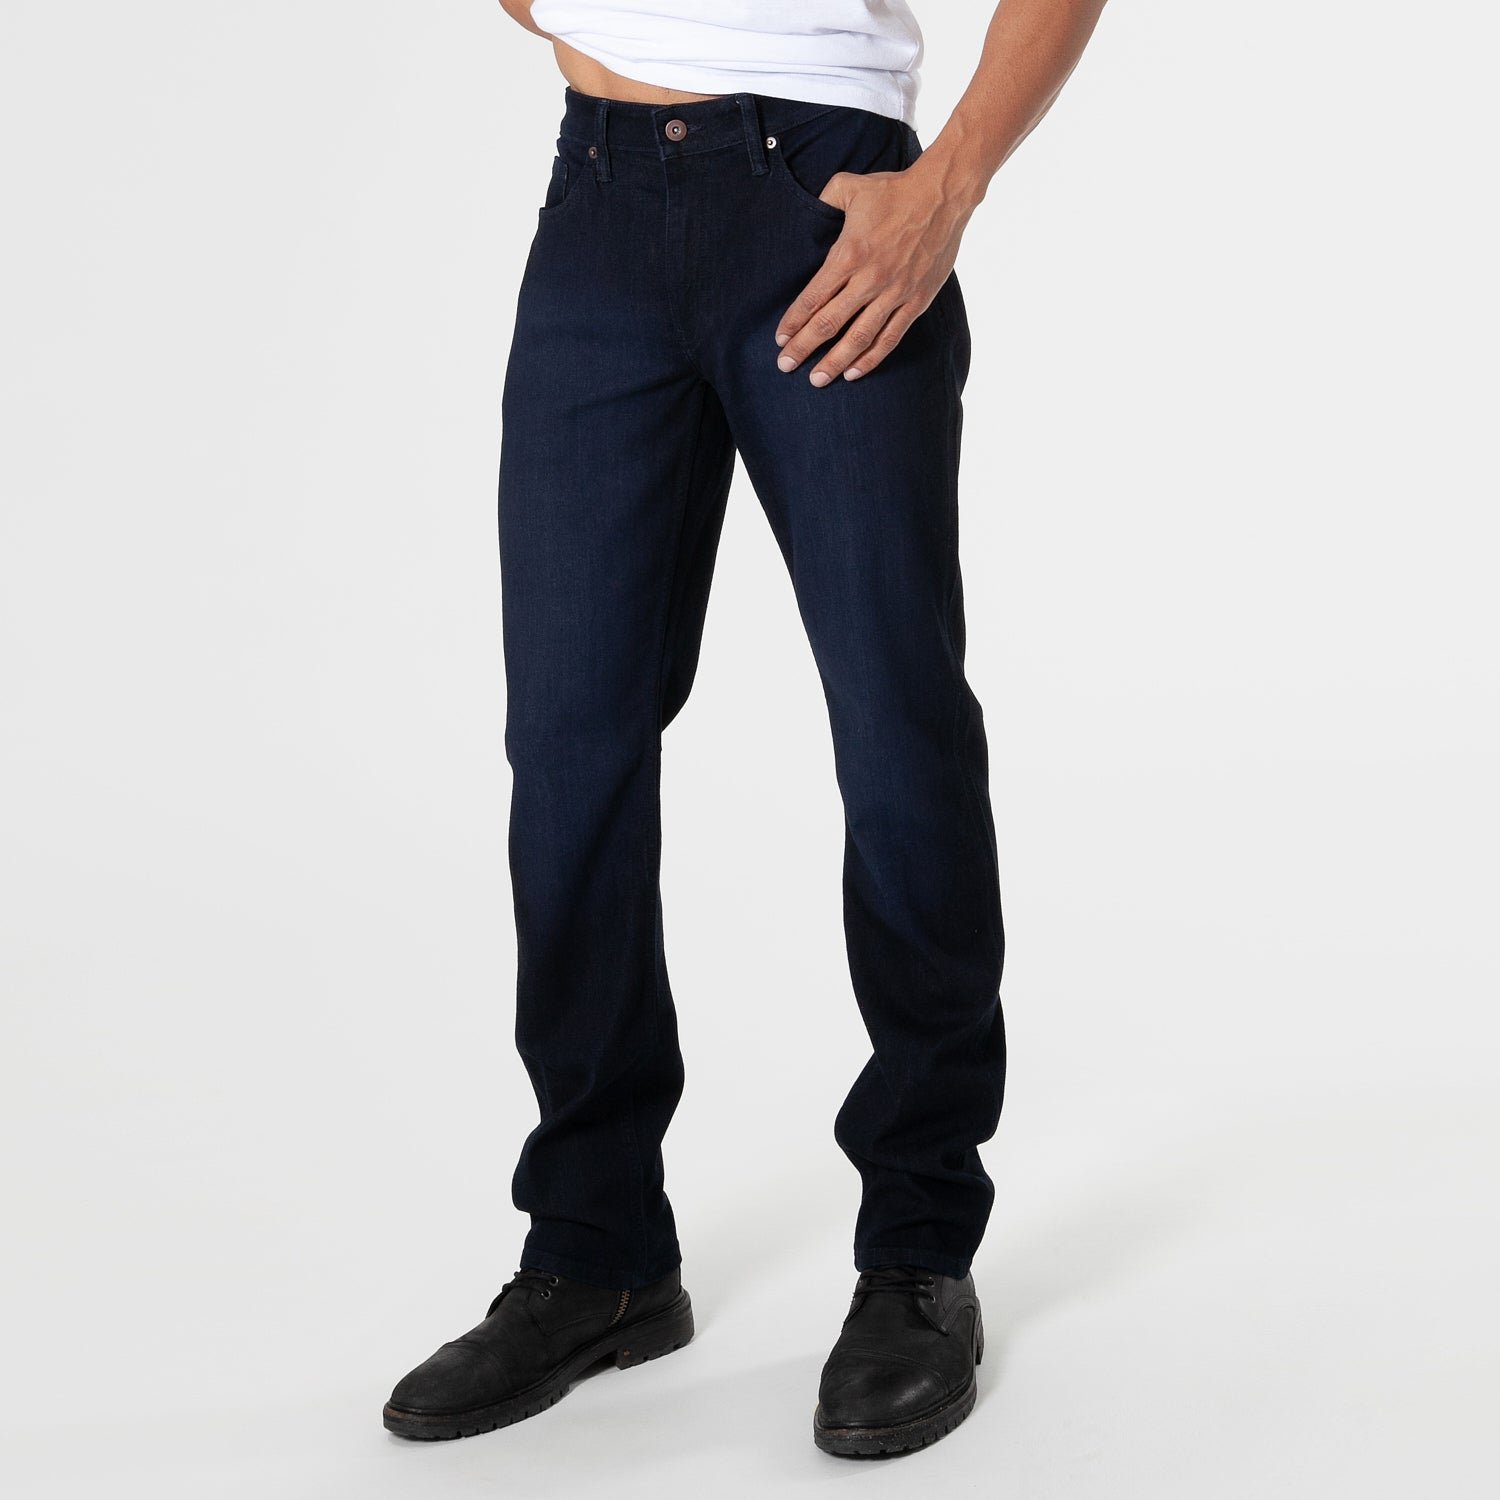 Indigo and Medium Straight Fit Comfort Jeans 2-Pack